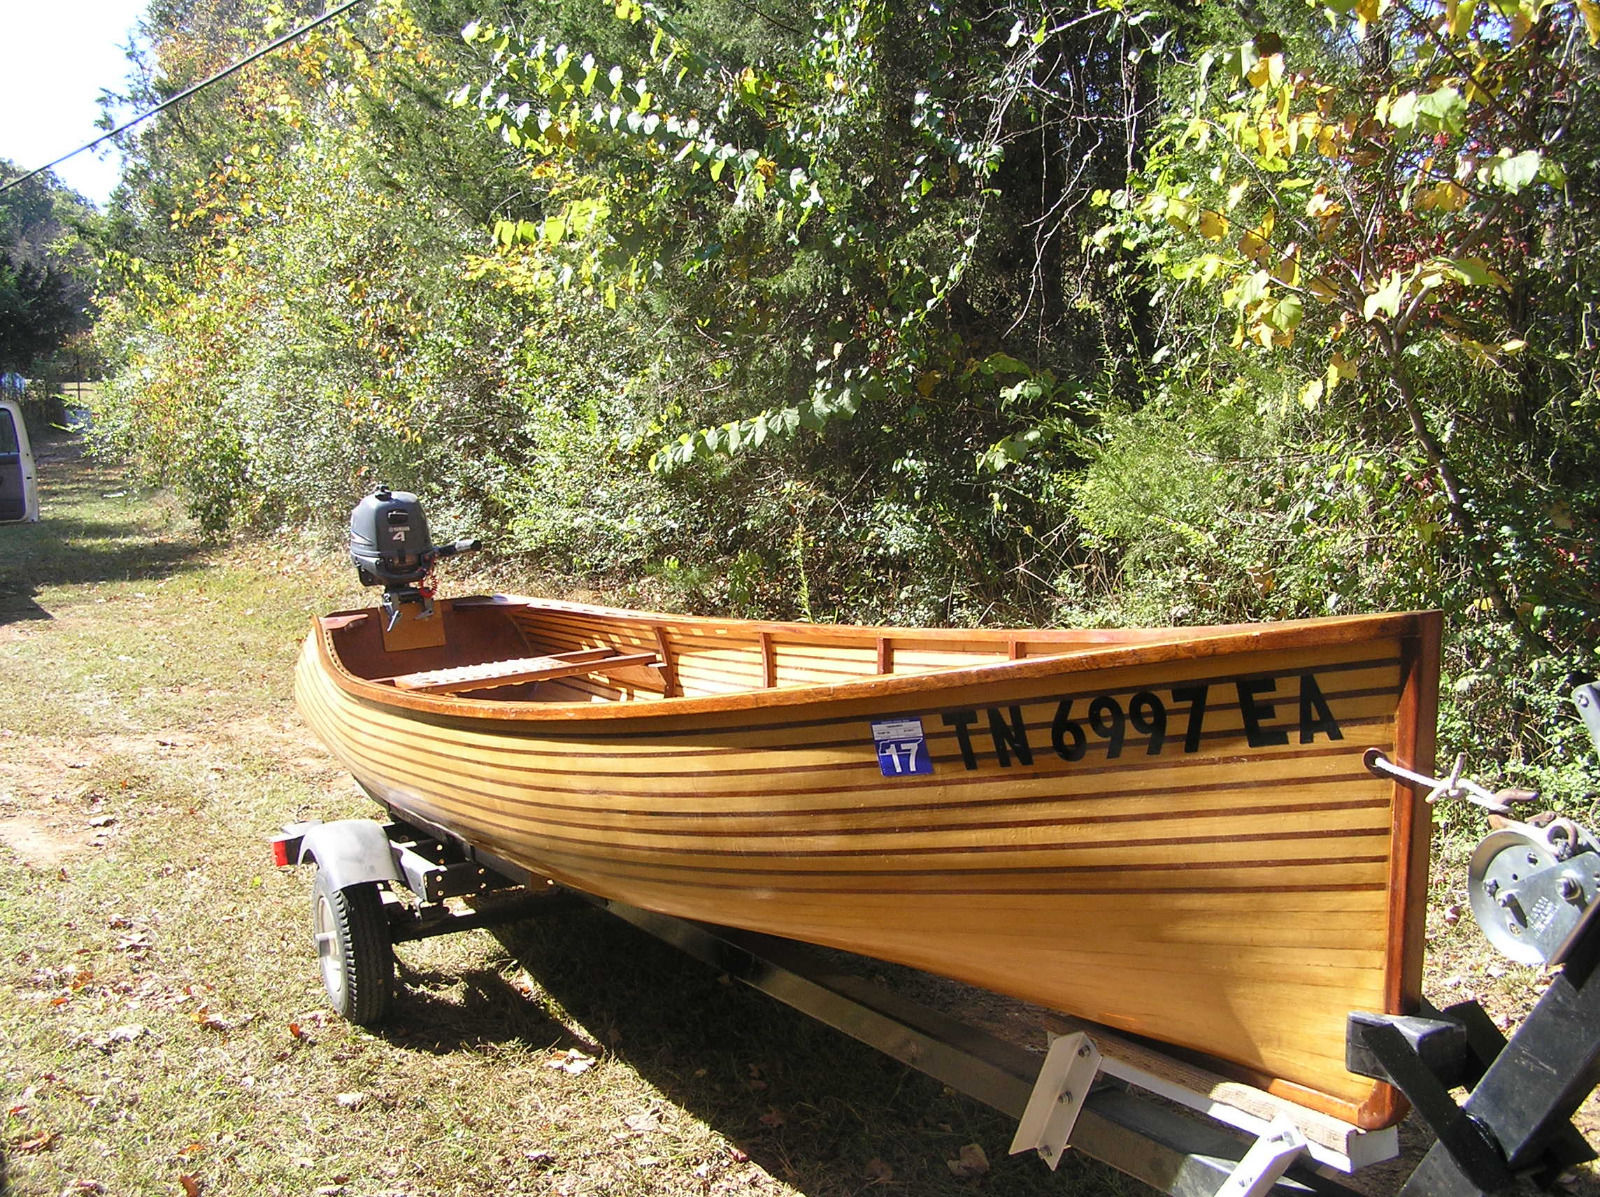 Custom Built Sport Boat 2010 for sale for $3,500 - Boats ...